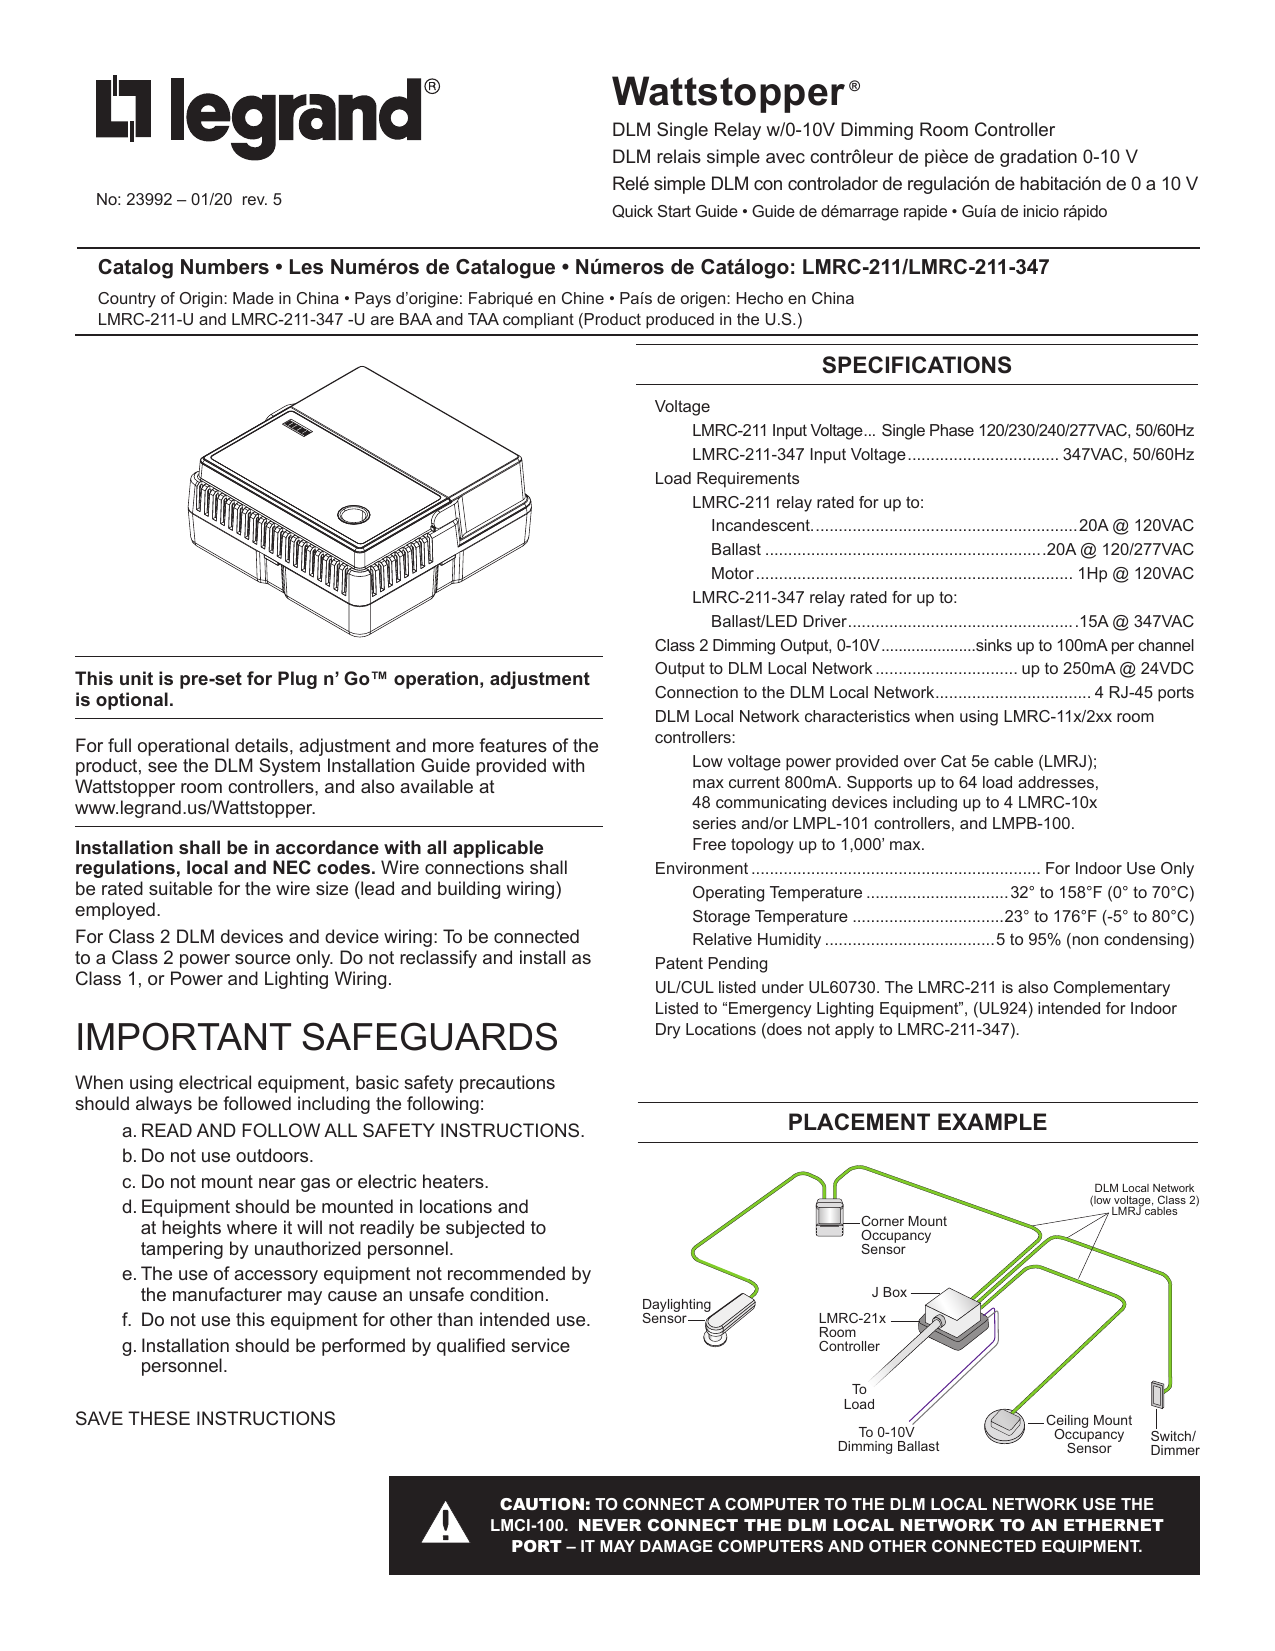 Legrand LMRC-211 DLM Single Relay w/0-10V Dimming Room Controller Quick  Start Installation guide | Manualzz Alarm Panel Wiring Diagram Manualzz